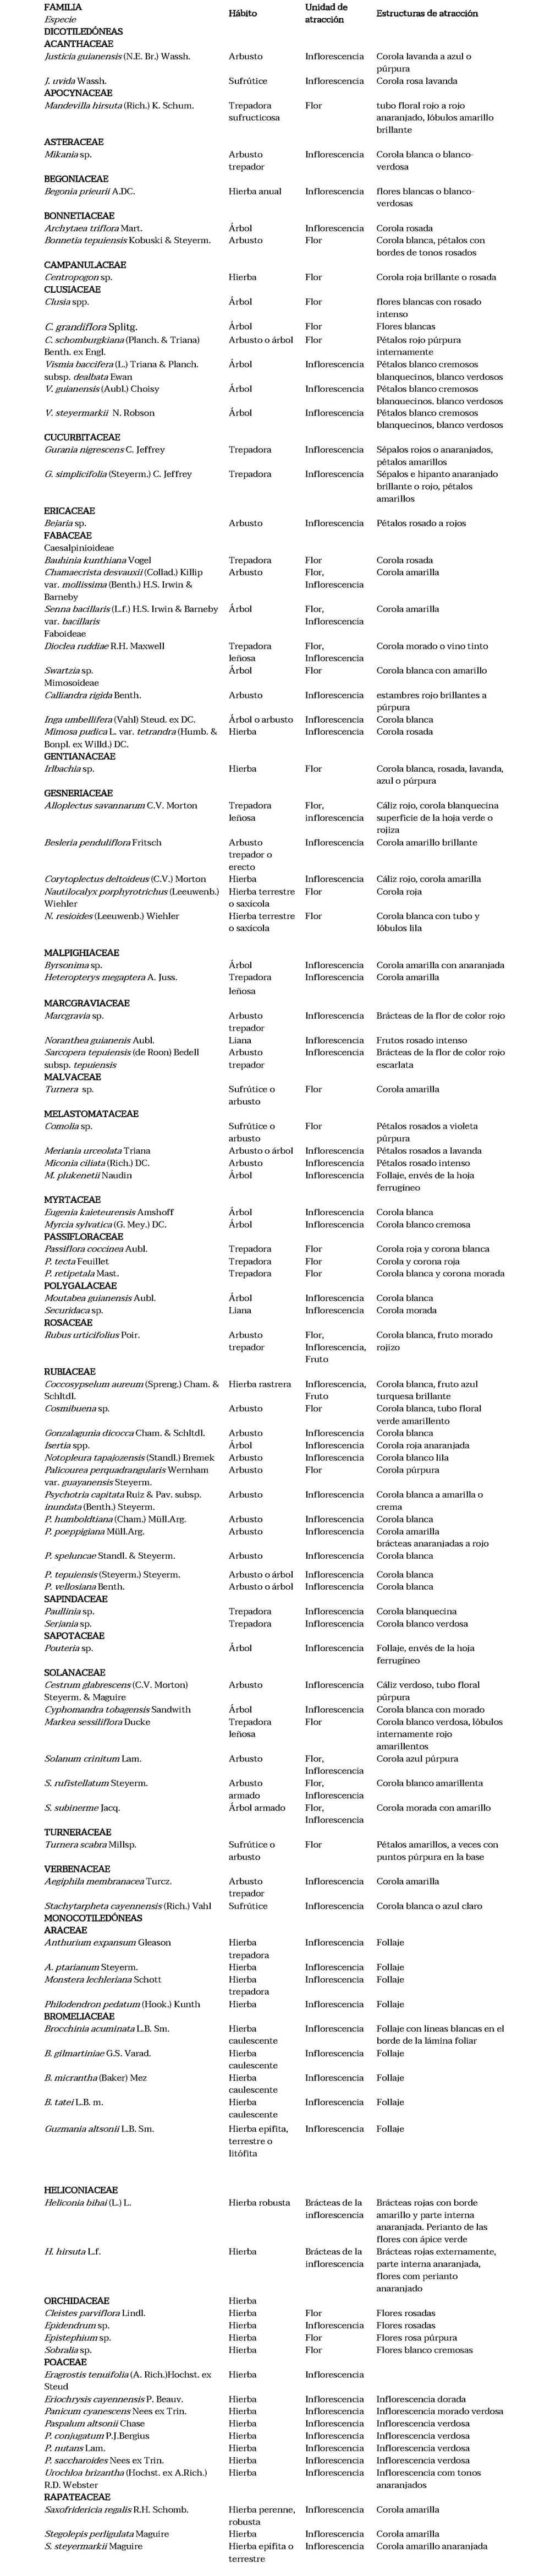 Tabla 1. Lista de especies al borde de la carretera del sector La Escalera, Sierra de Lema, Edo. Bolívar, Venezuela.